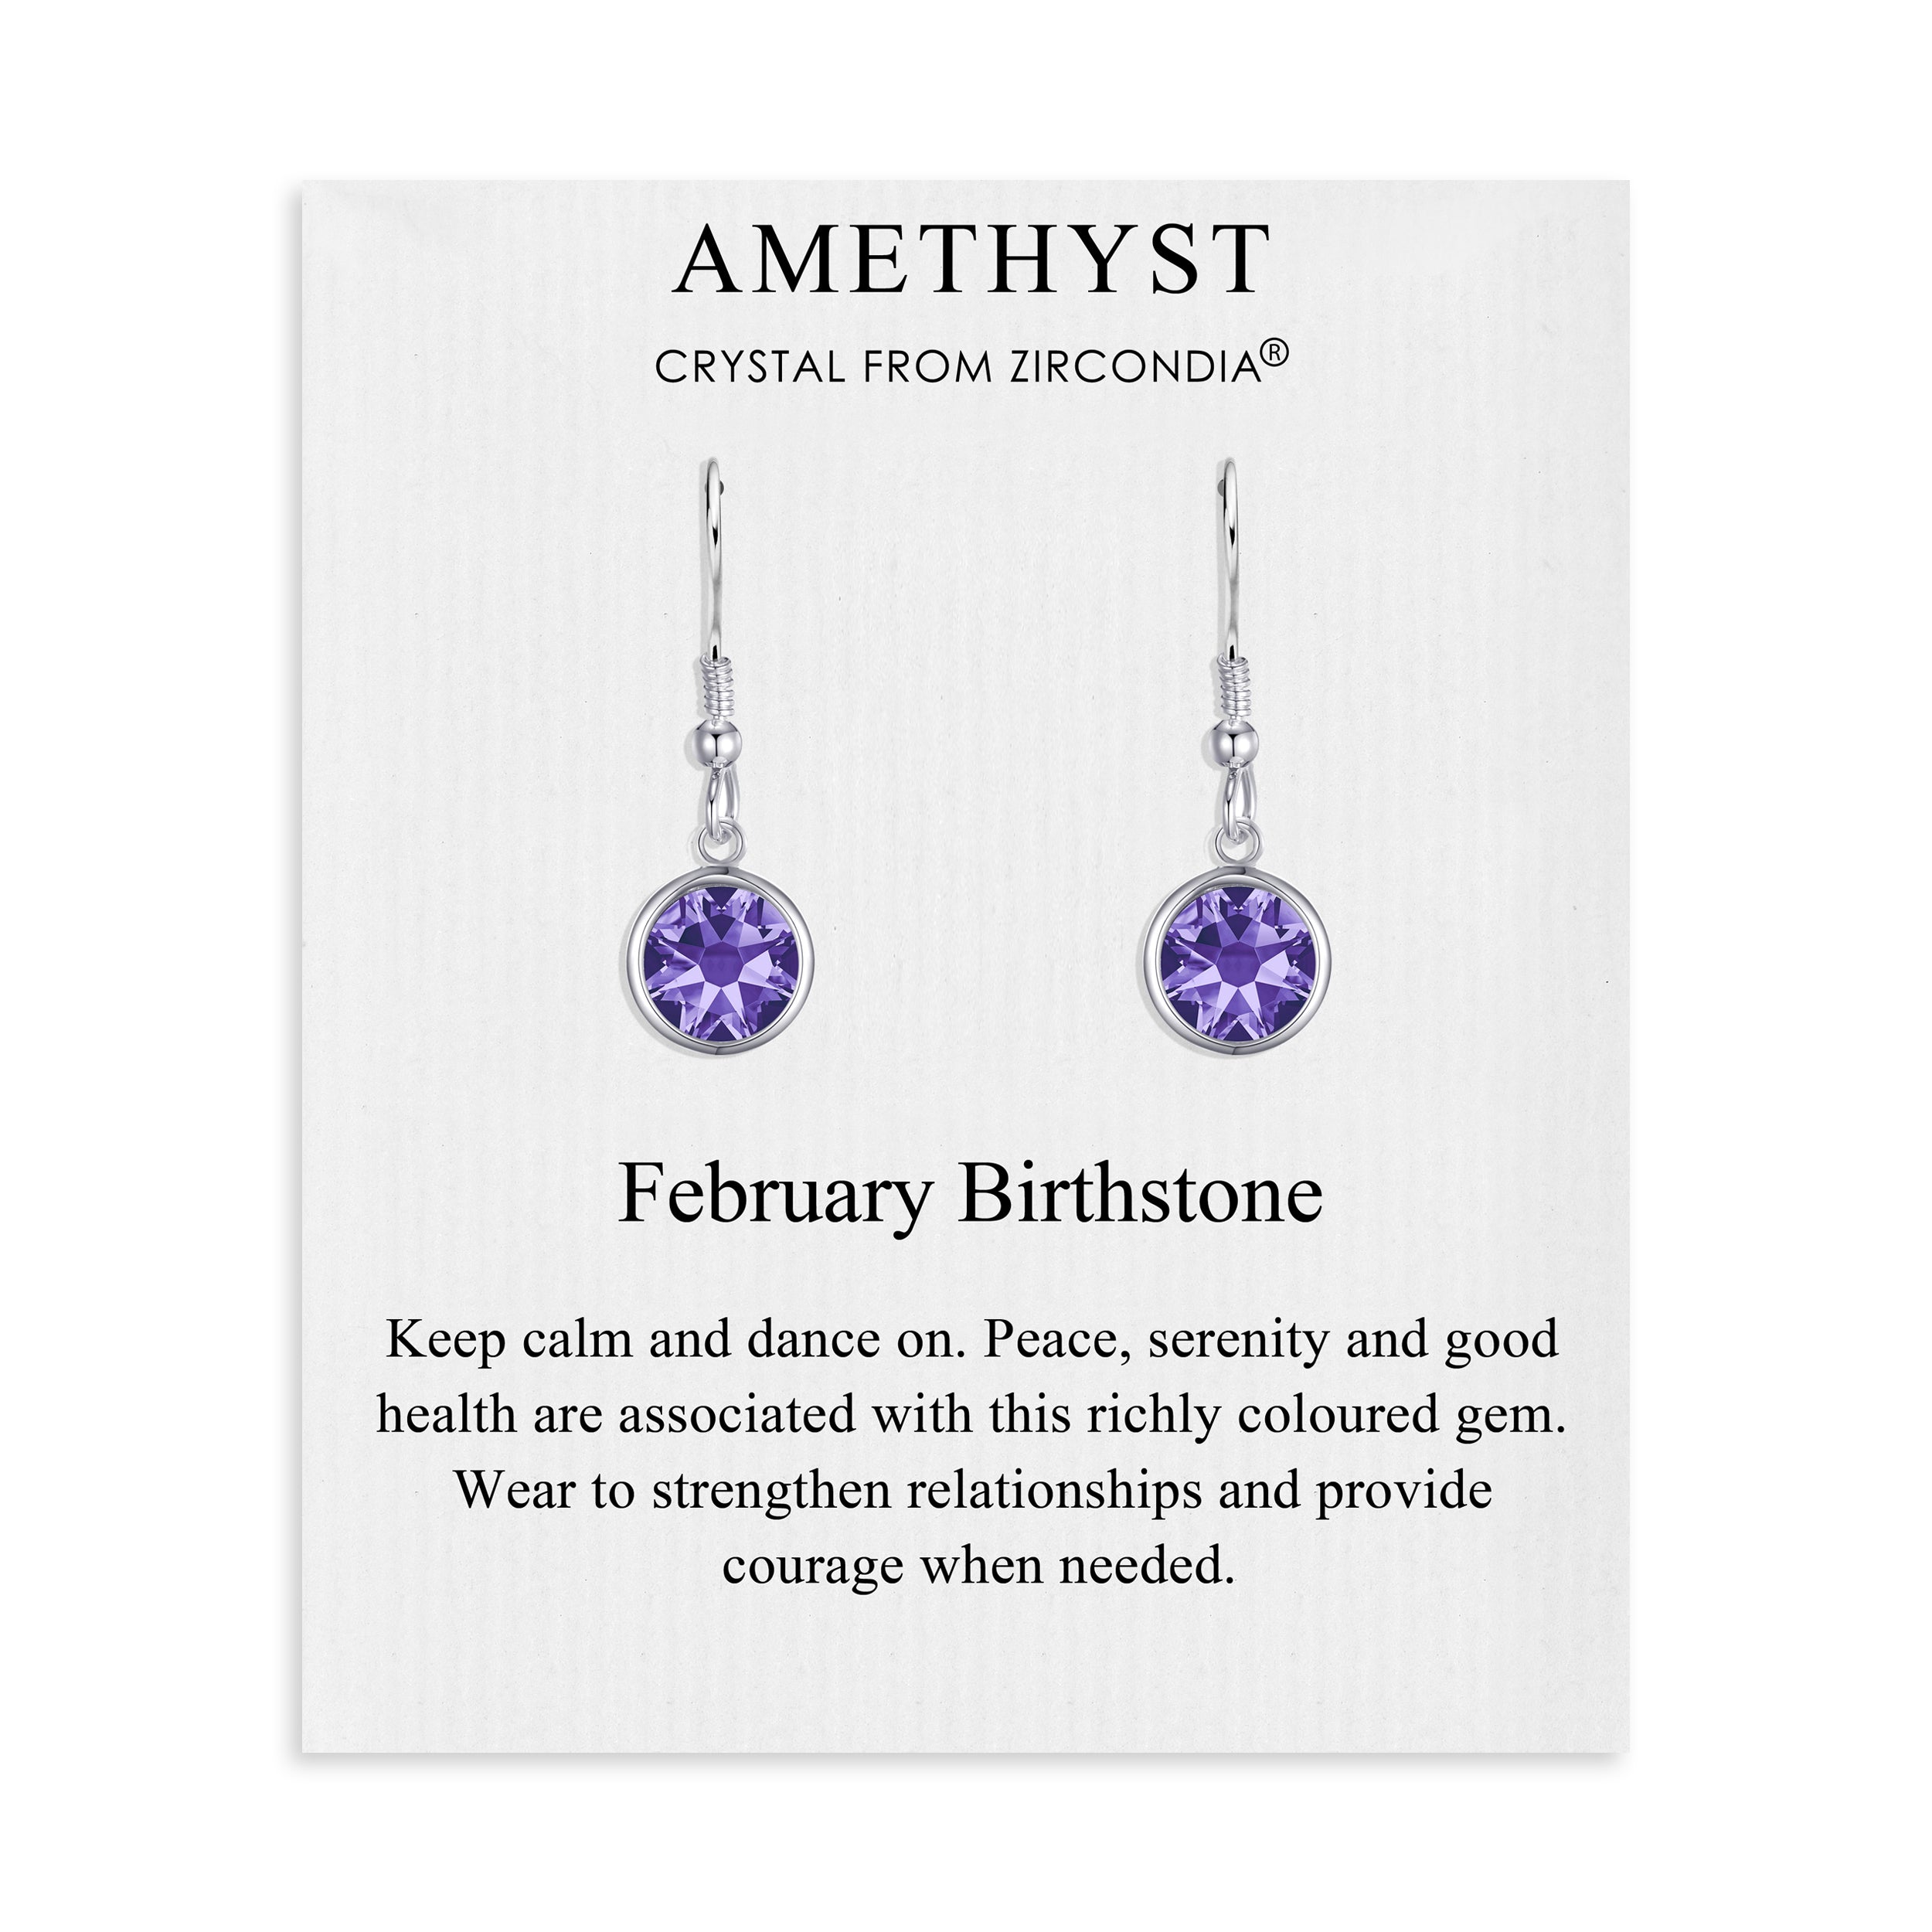 February Birthstone Drop Earrings Created with Amethyst Zircondia® Crystals by Philip Jones Jewellery